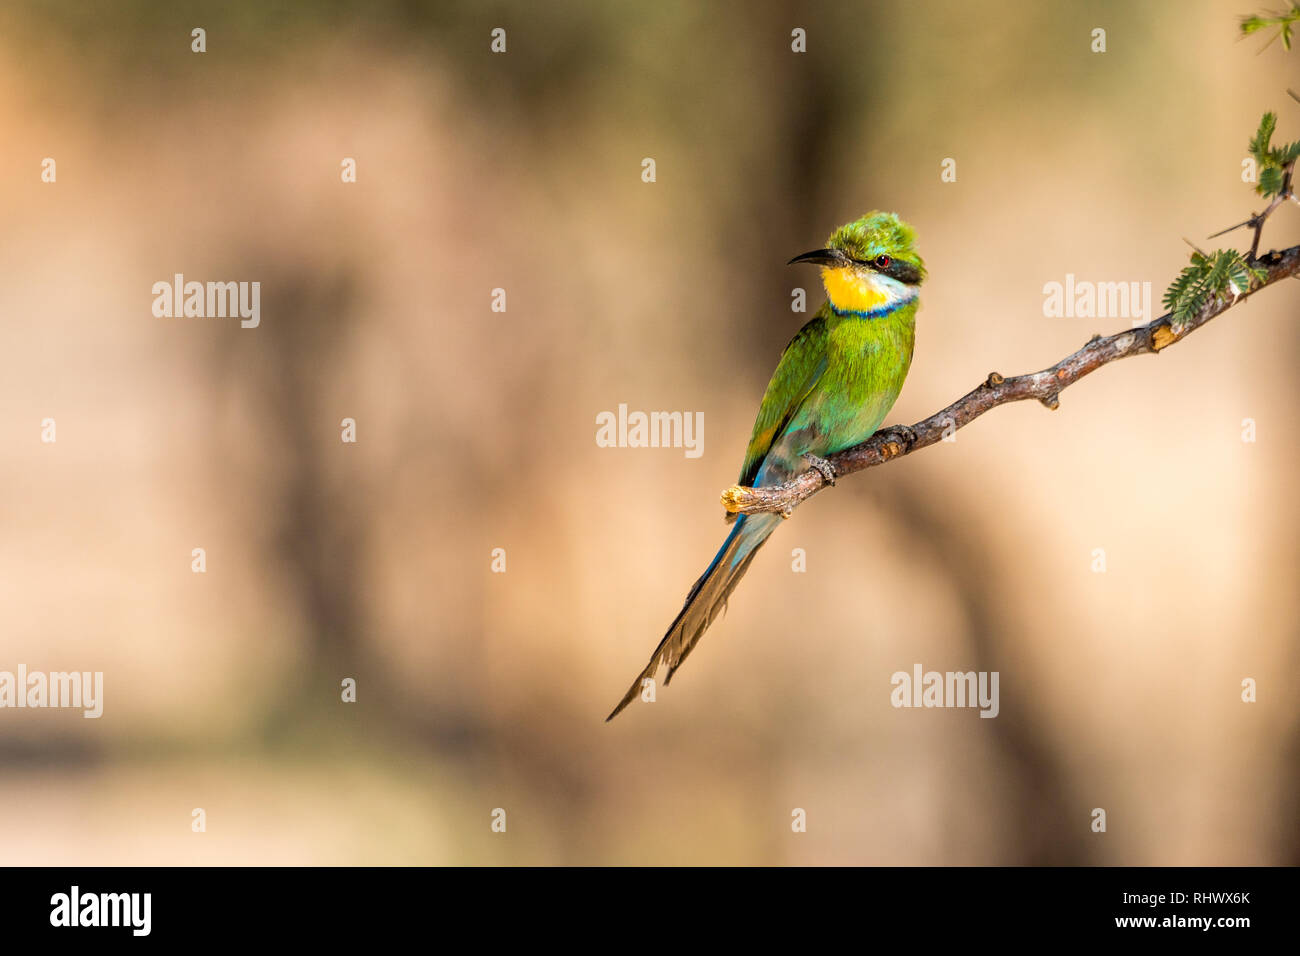 A beautiful little bird in the Kalahari Desert Stock Photo